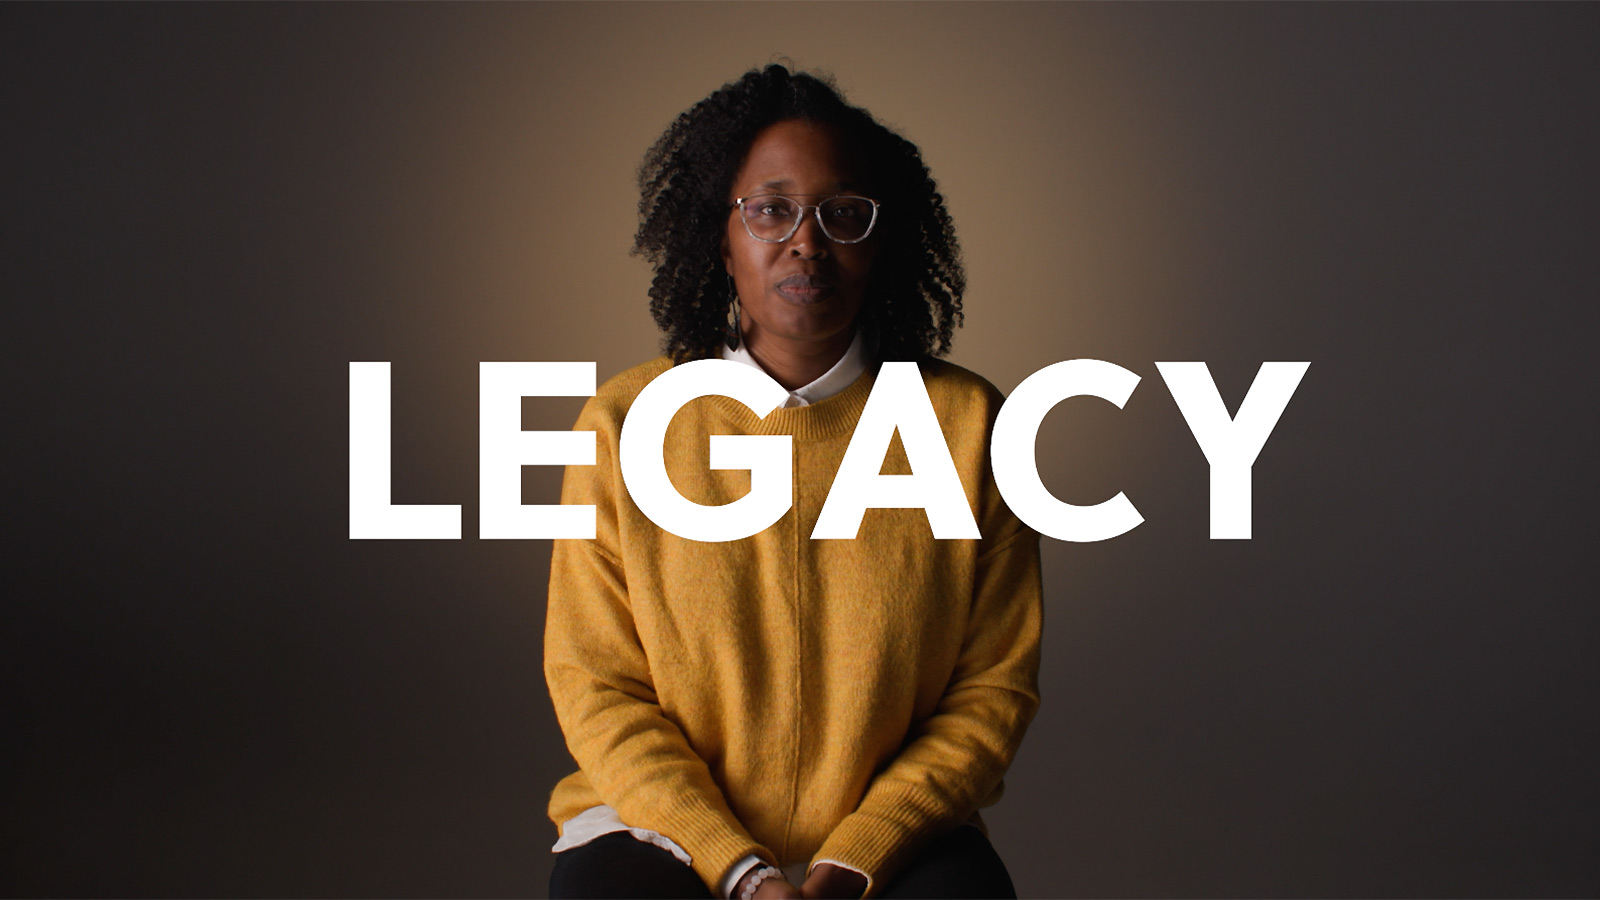 Kauffman Scholars, Inc. video: "Legacy"